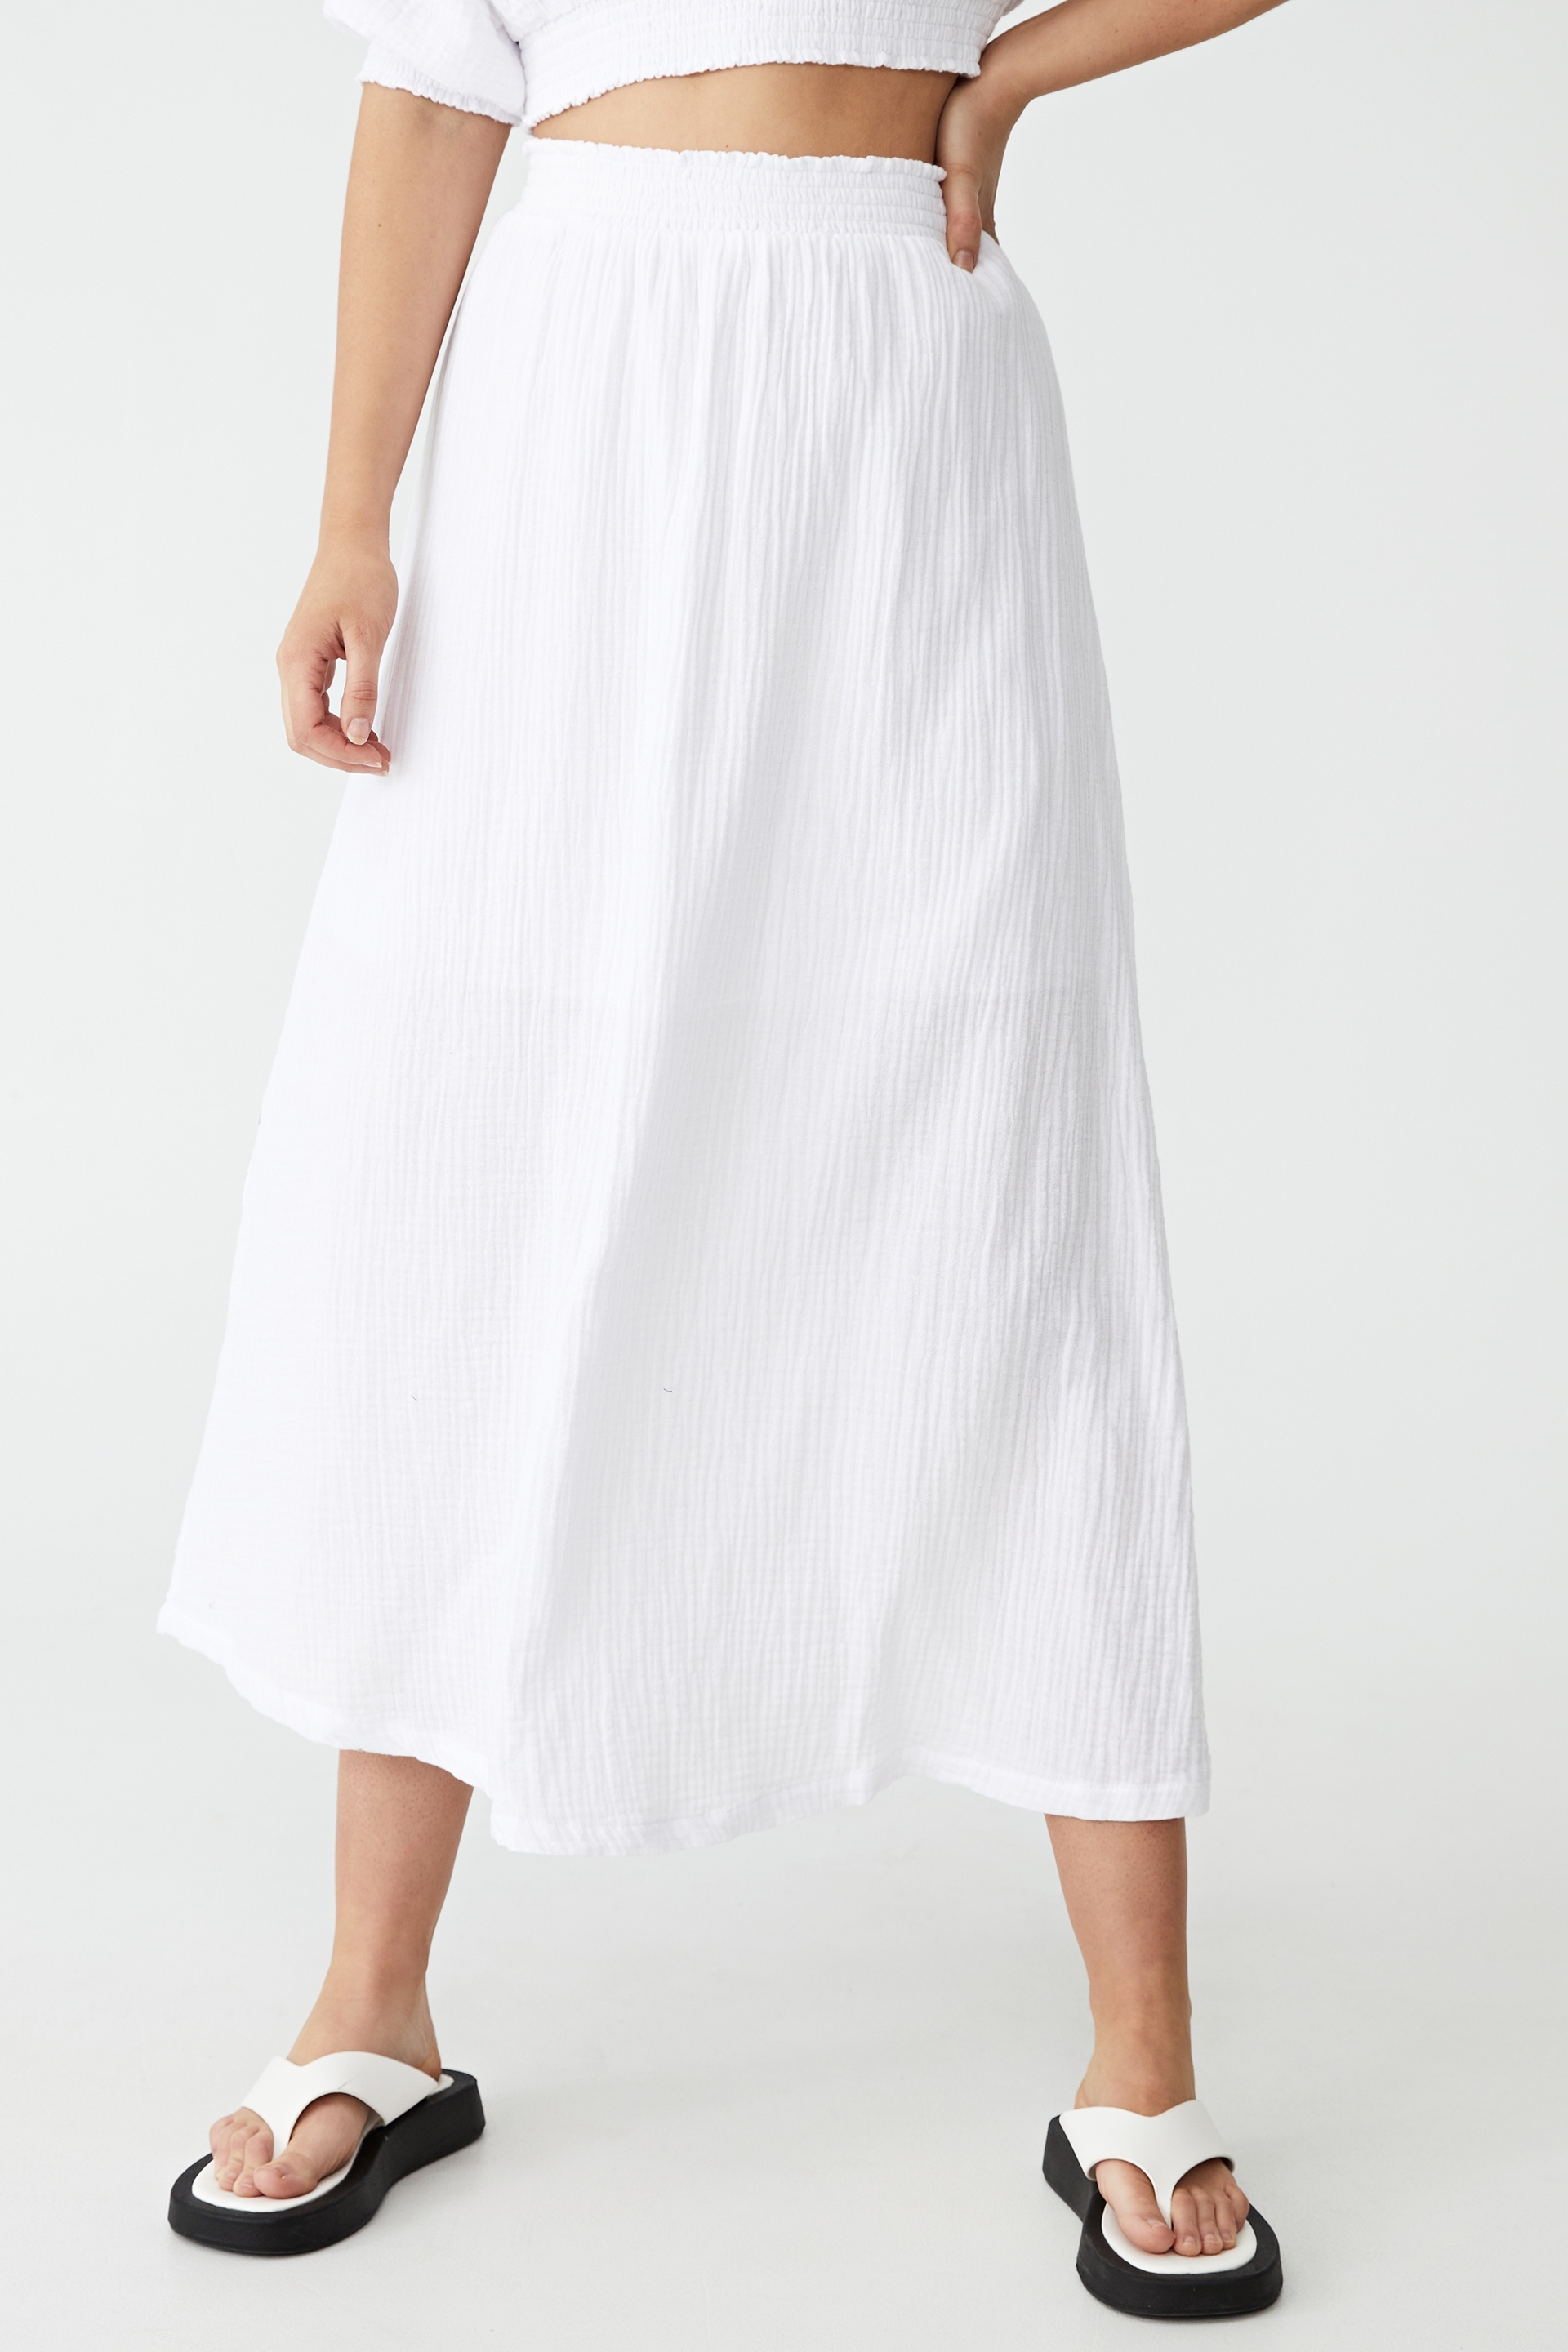 Cotton On Women - Woven Riviera Maxi Skirt - White